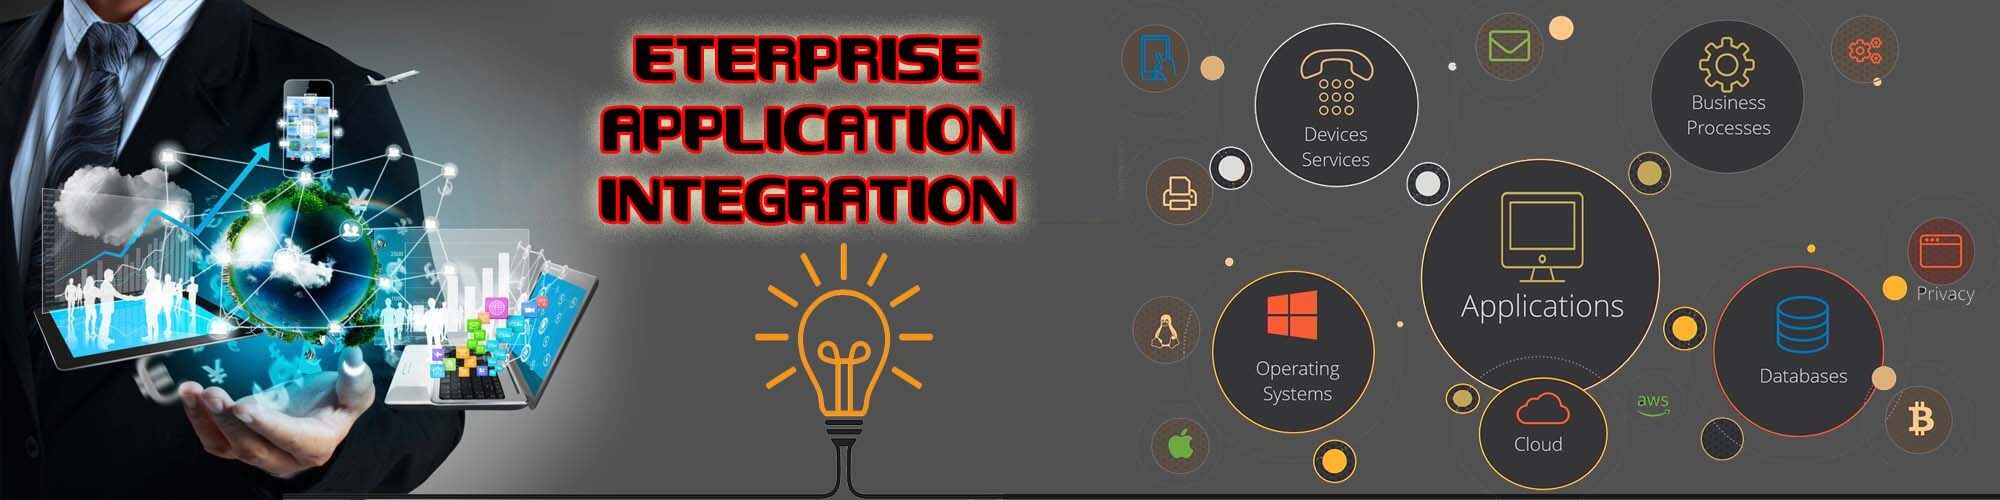 Eterprise Application Integration